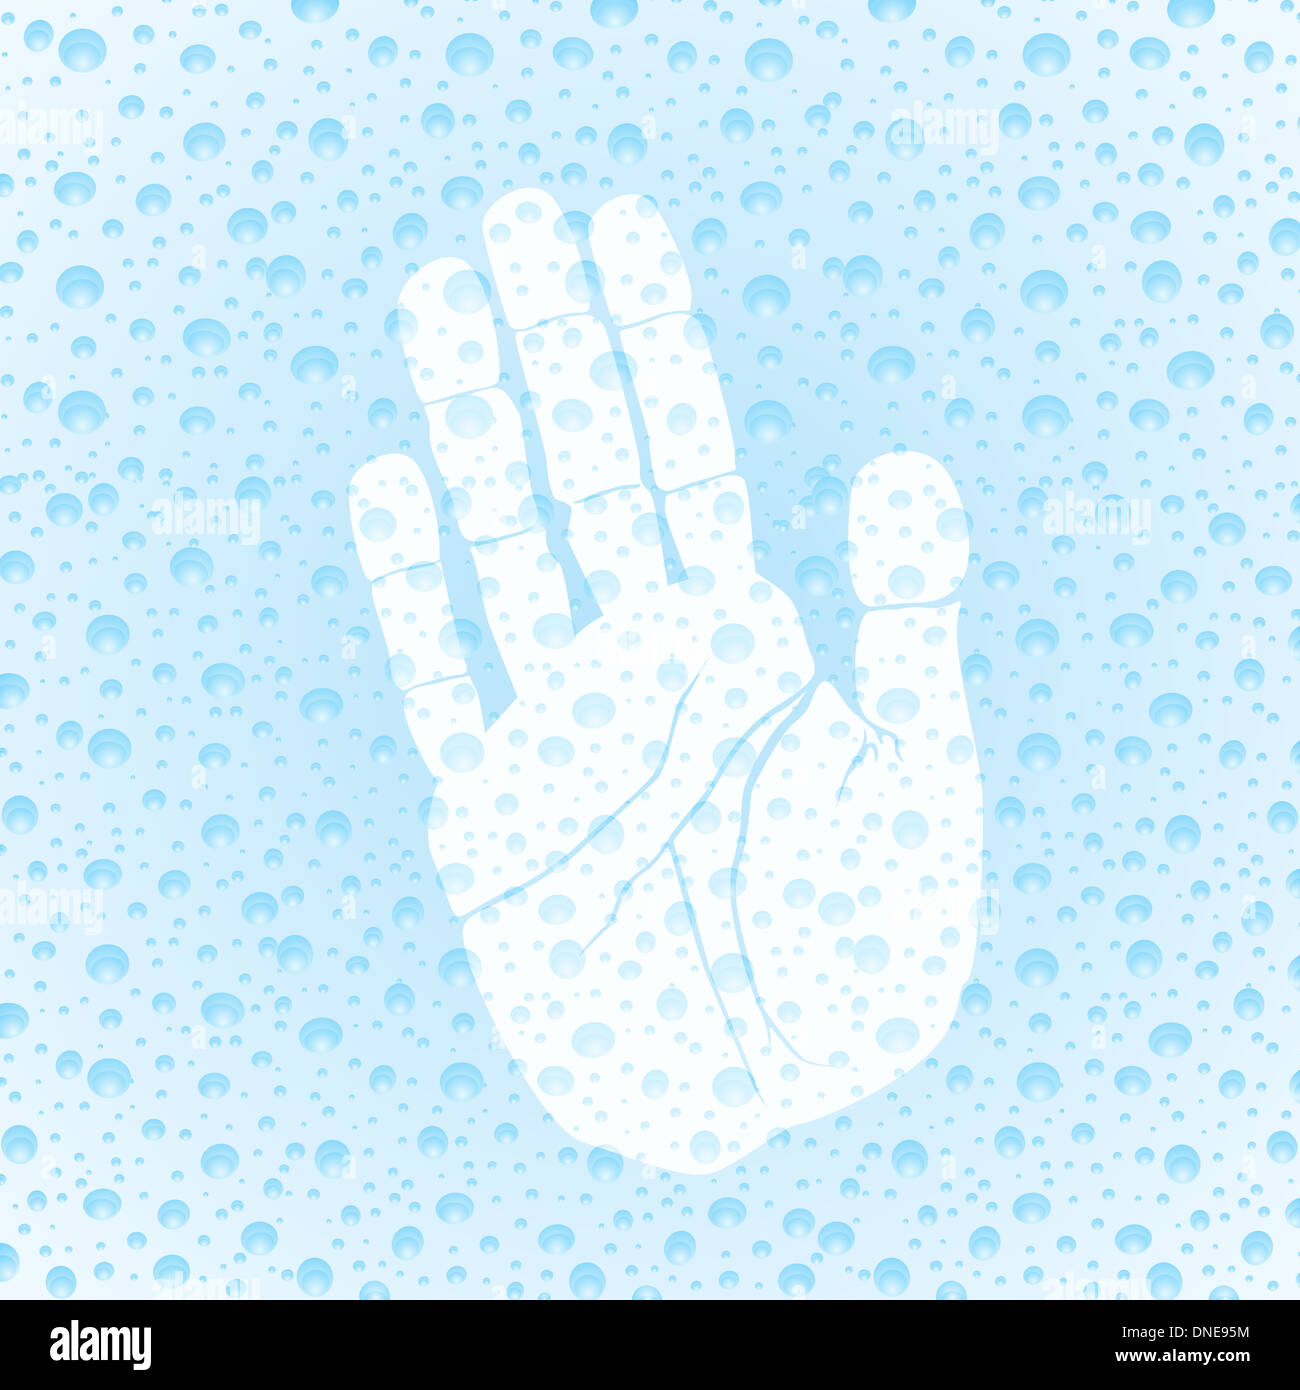 Handprint on the sweaty glass. The illustration on blue background Stock Photo